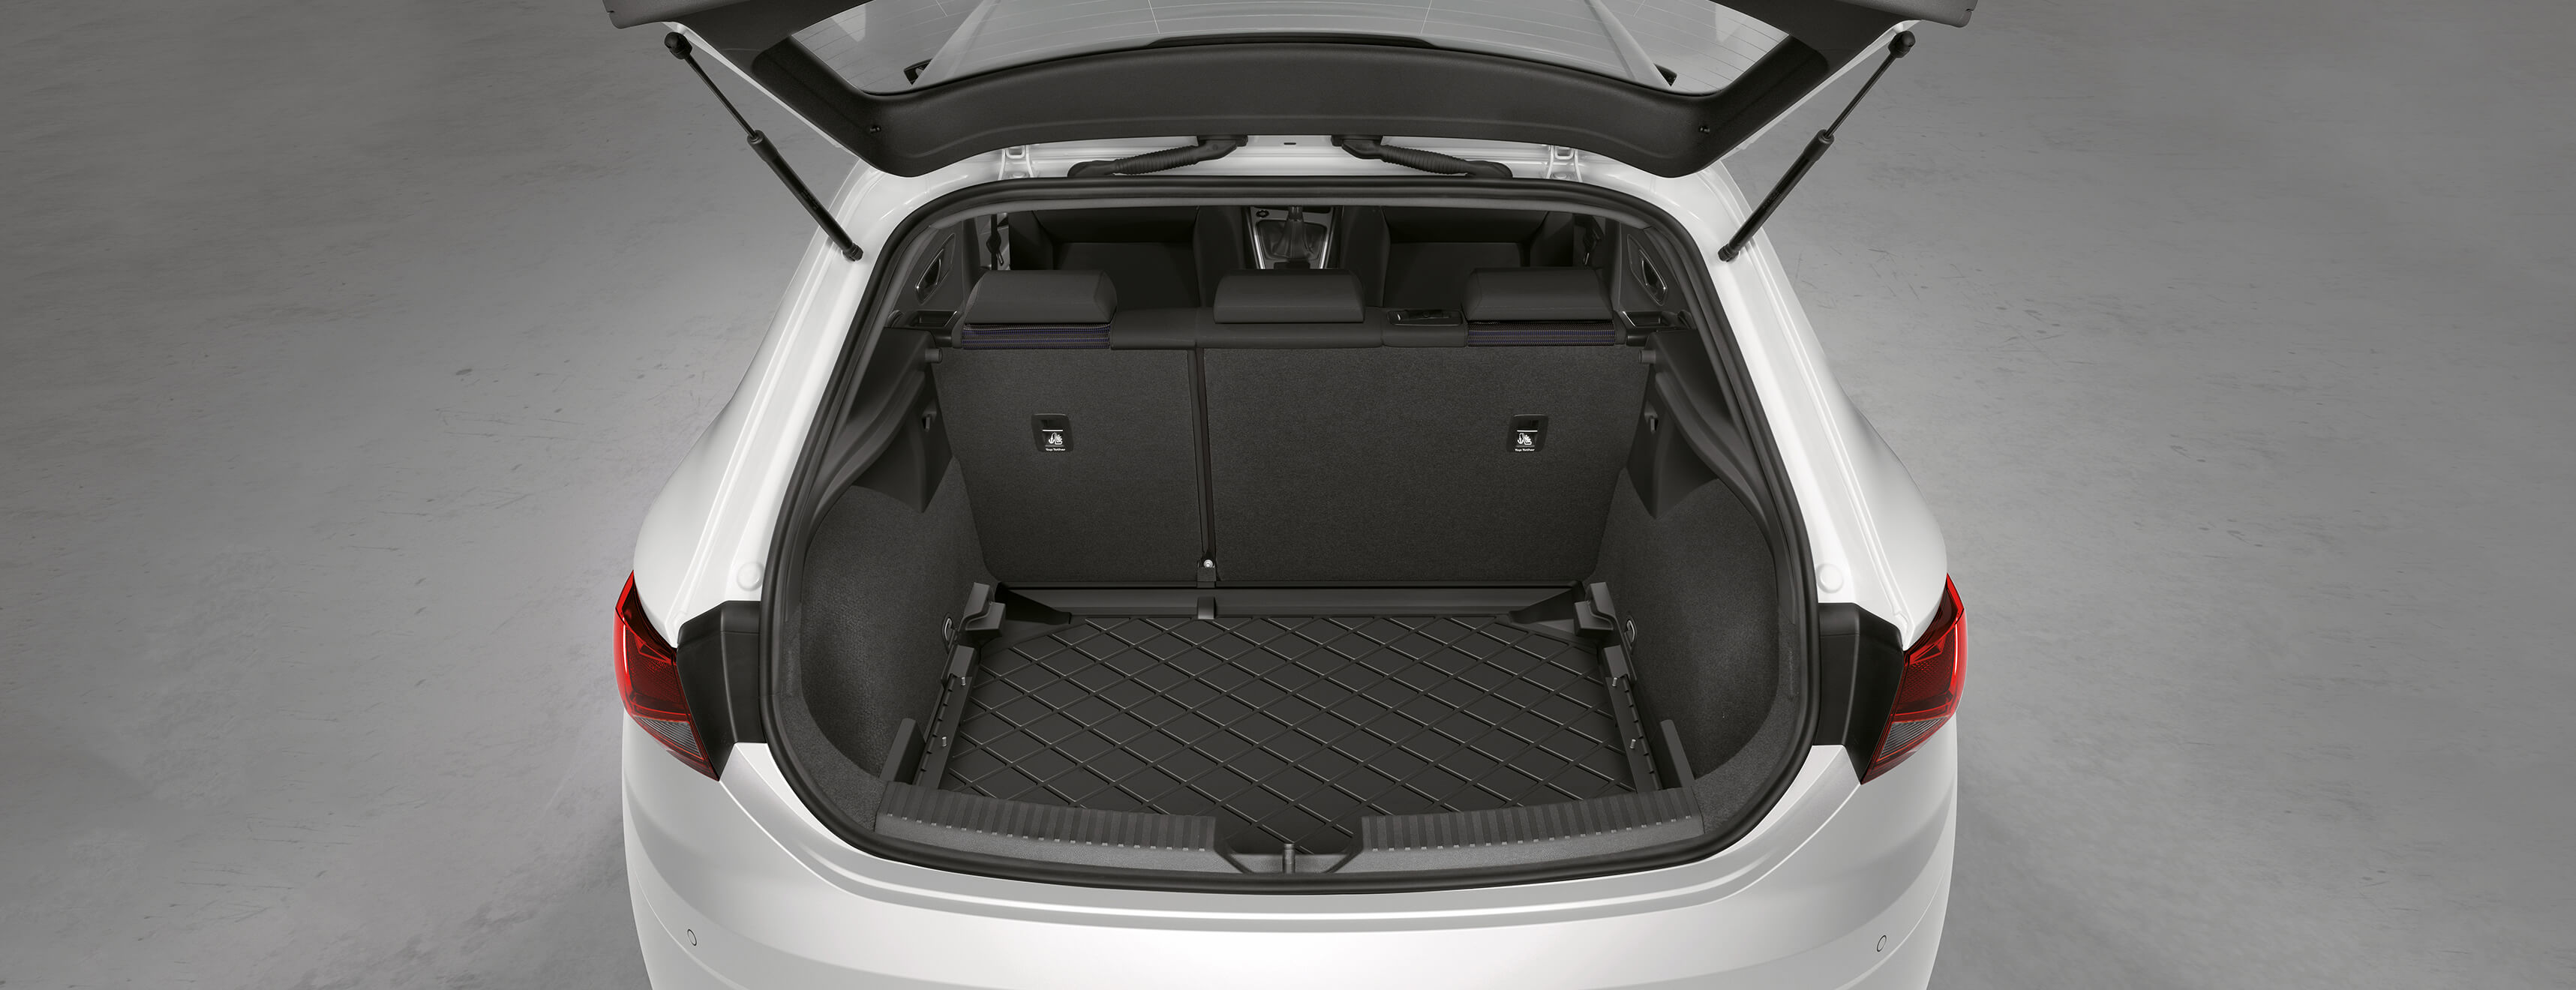 SEAT Leon protective trunk accessories – SEAT Leon 5D Accessories